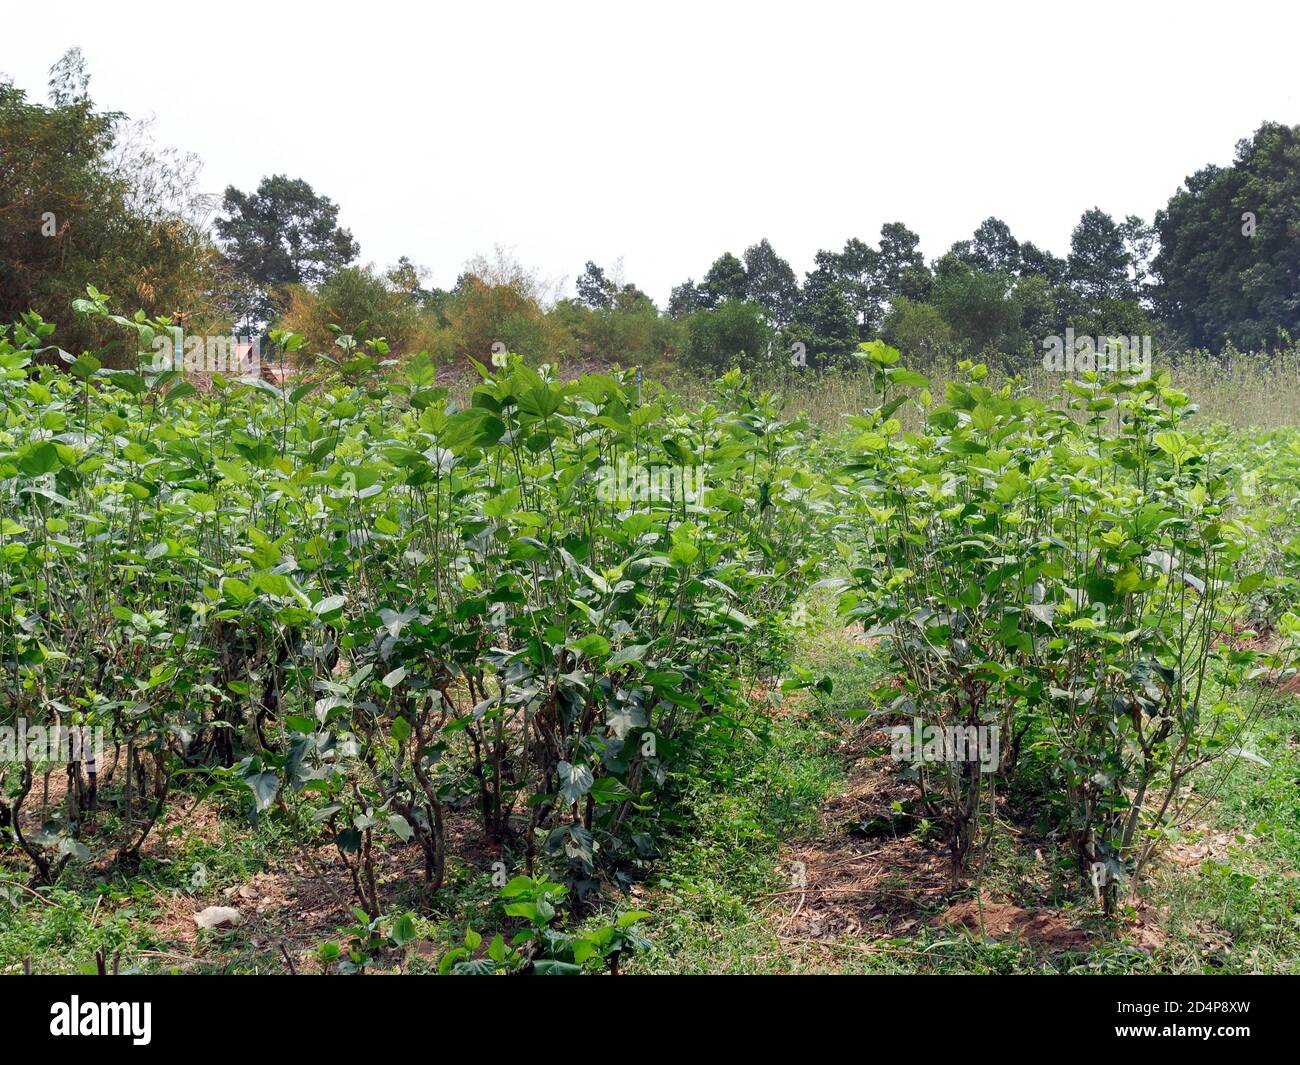 Maulbeerplantage, morus alba, Seam Reap Provinz, Handwerk, Seidenarbeit, Seidenraupenzucht, Kambodscha Stockfoto